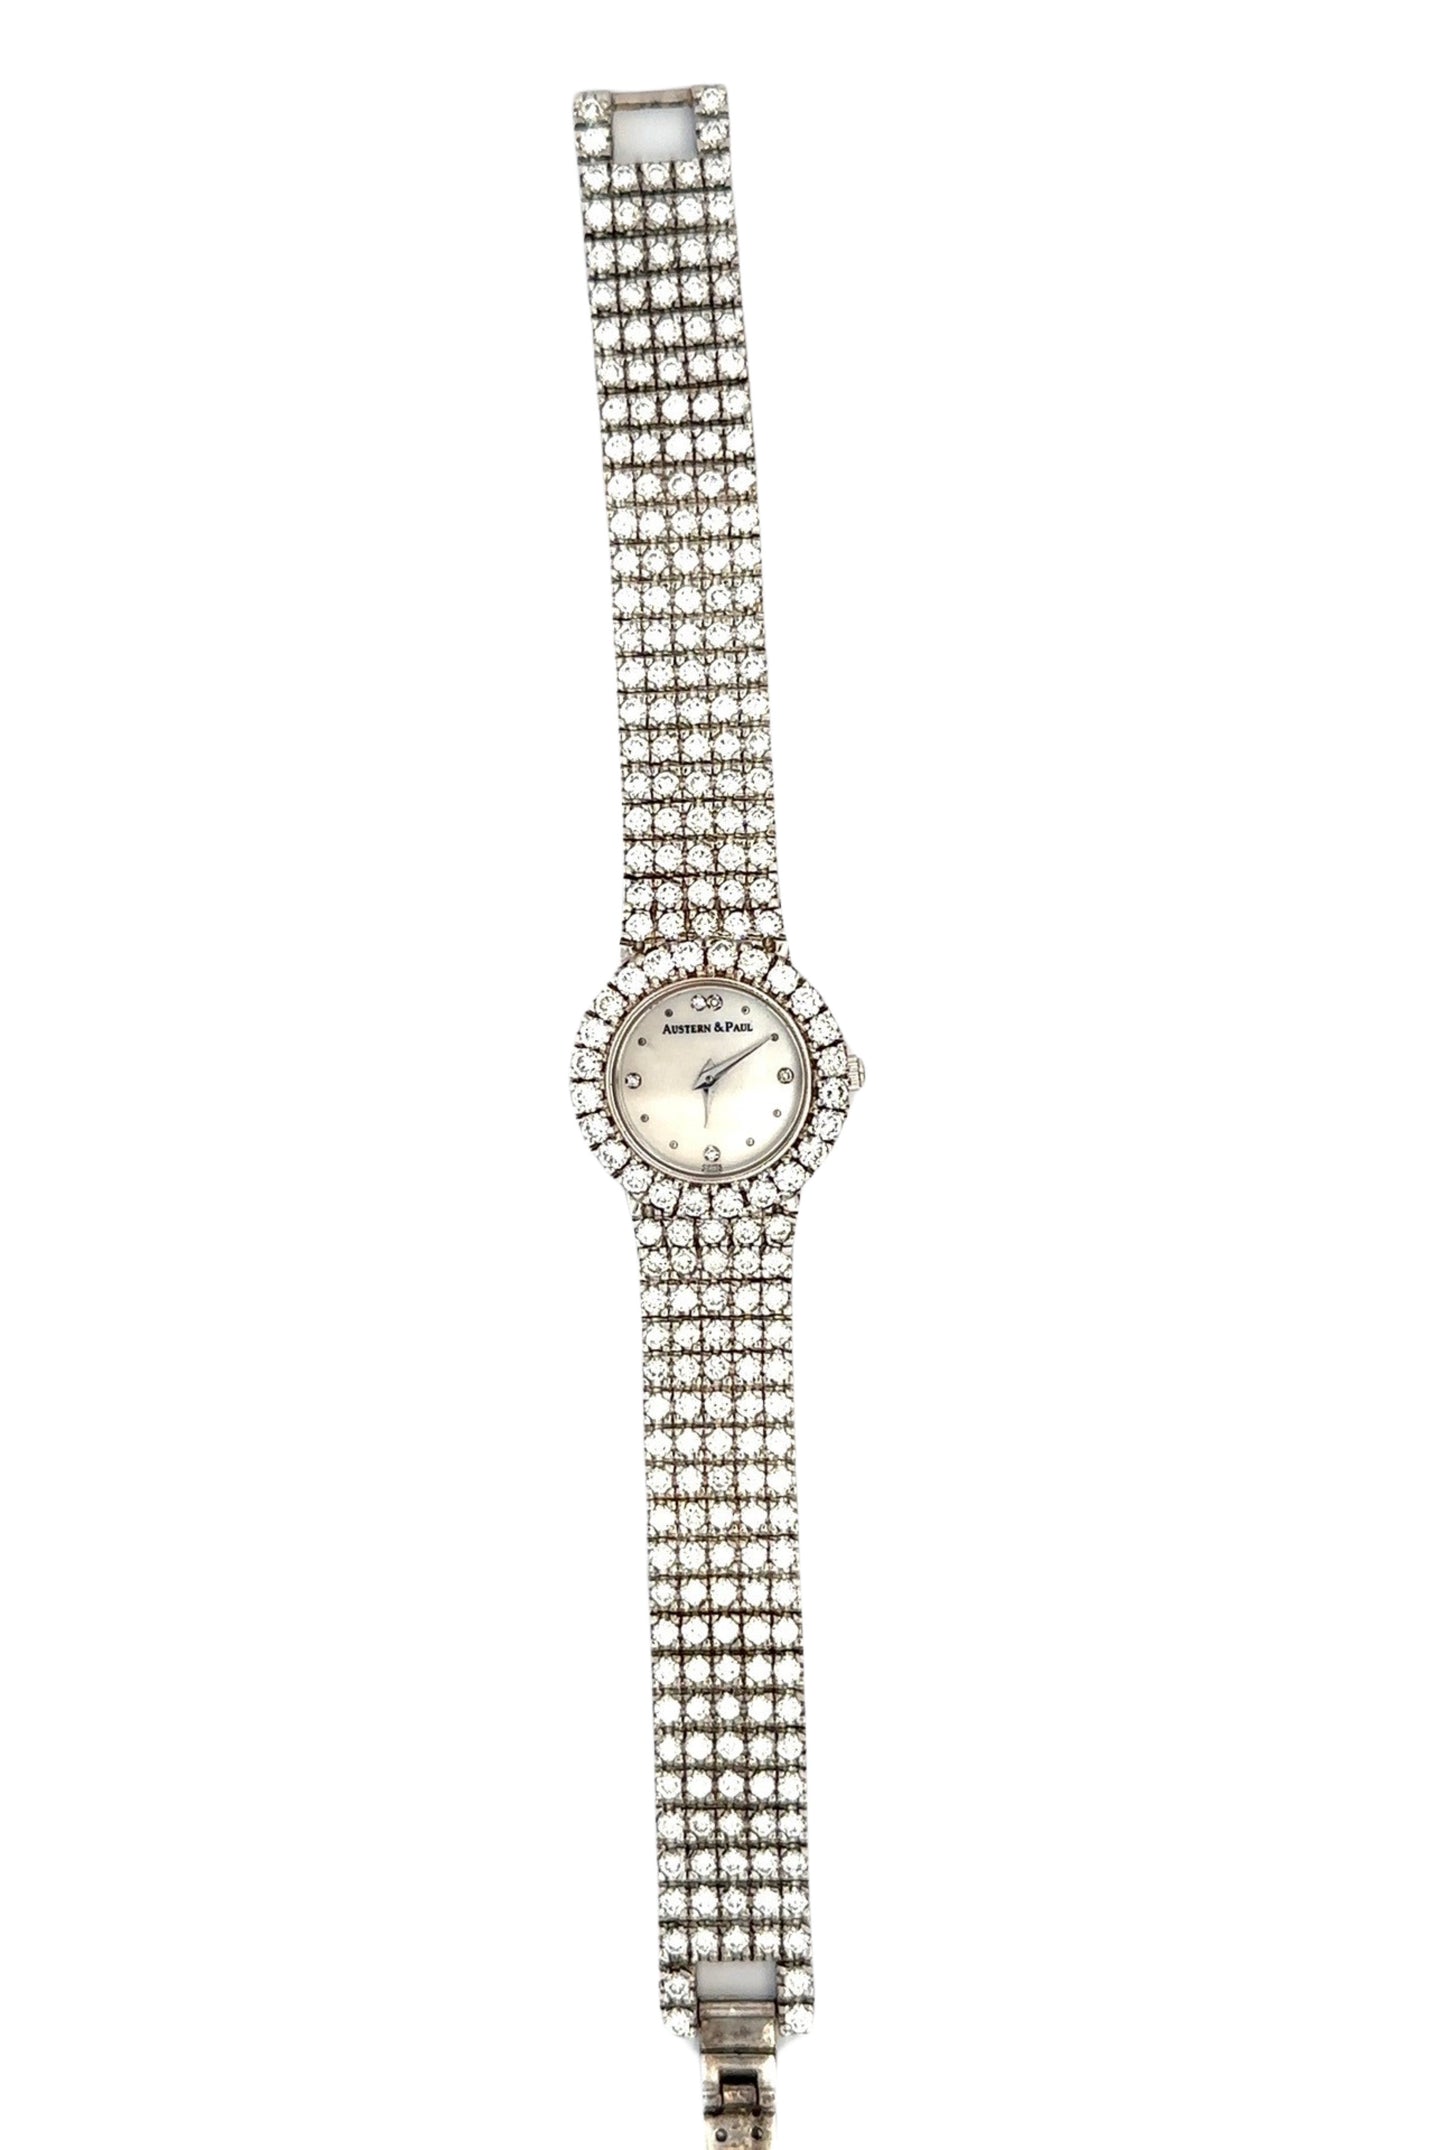 Whole length of diamond watch